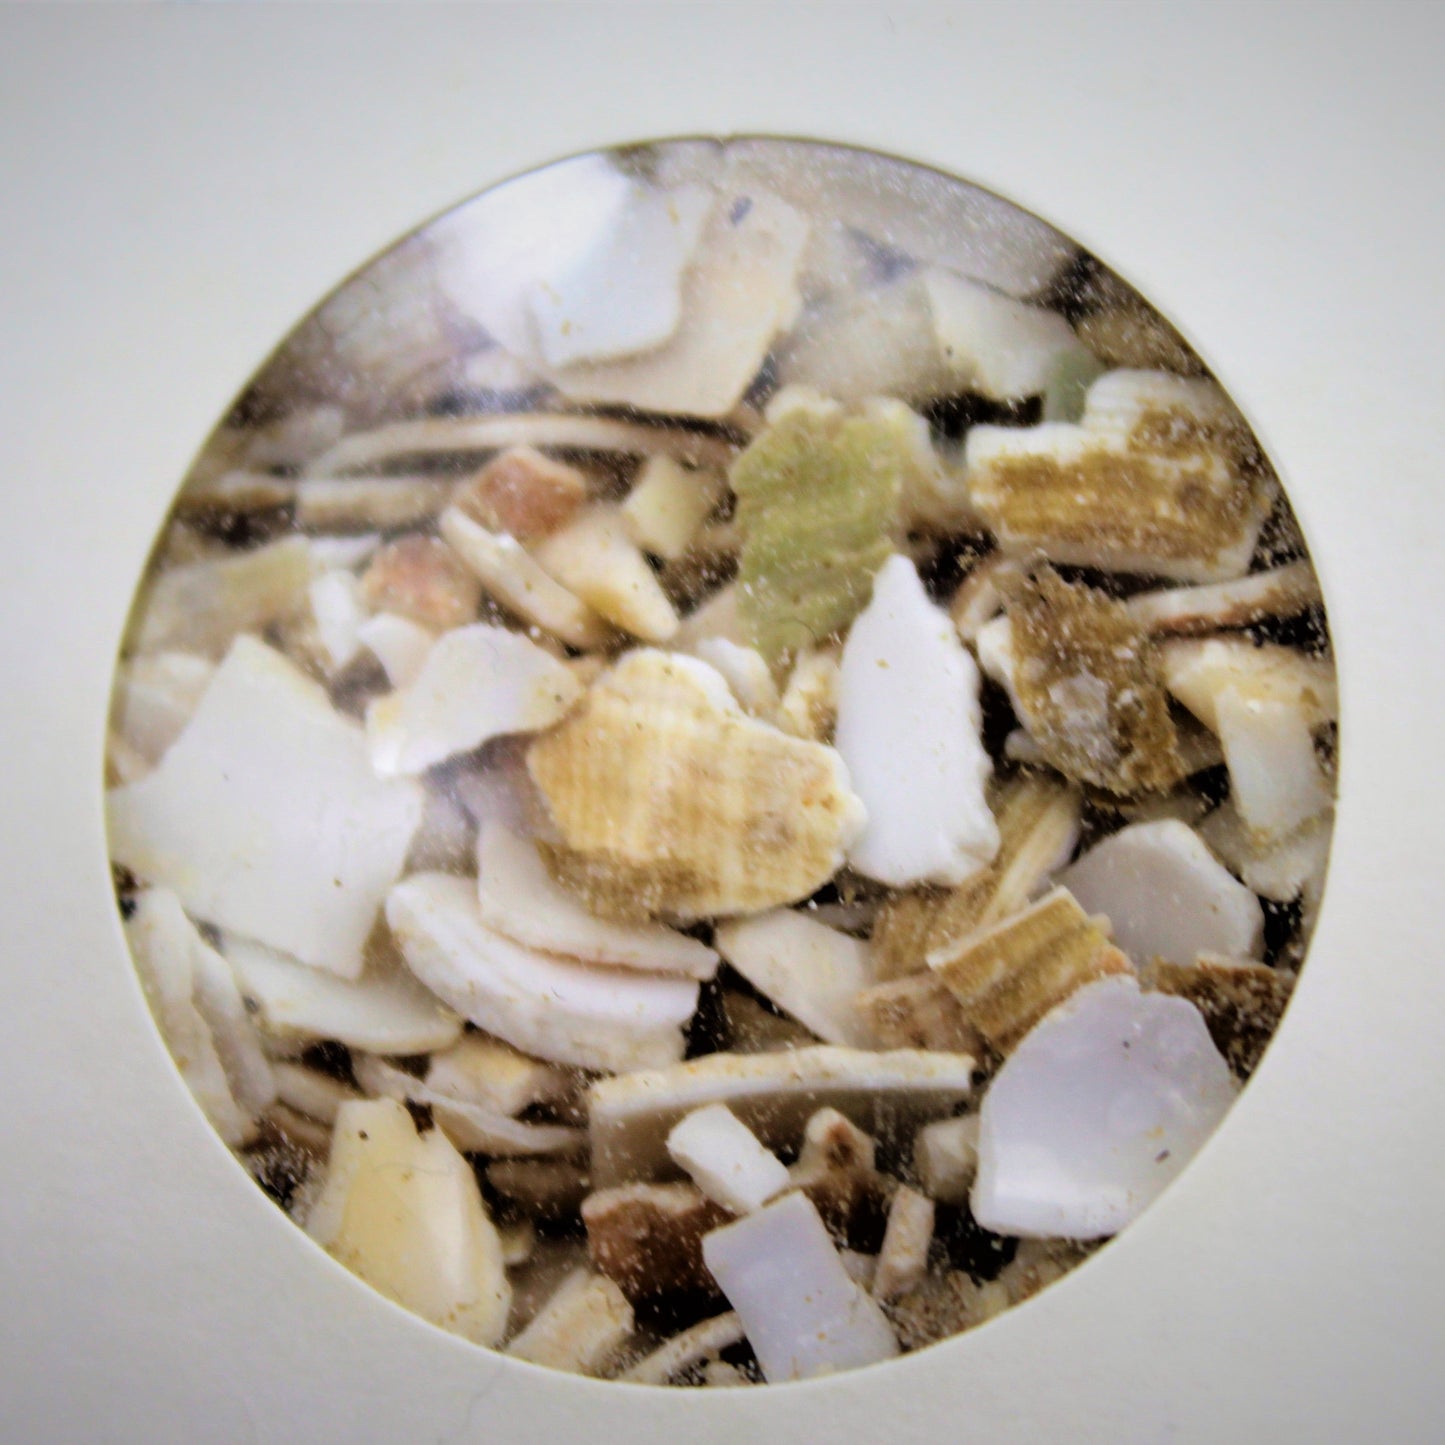 Shell On Earth - Crushed Whelk Shells